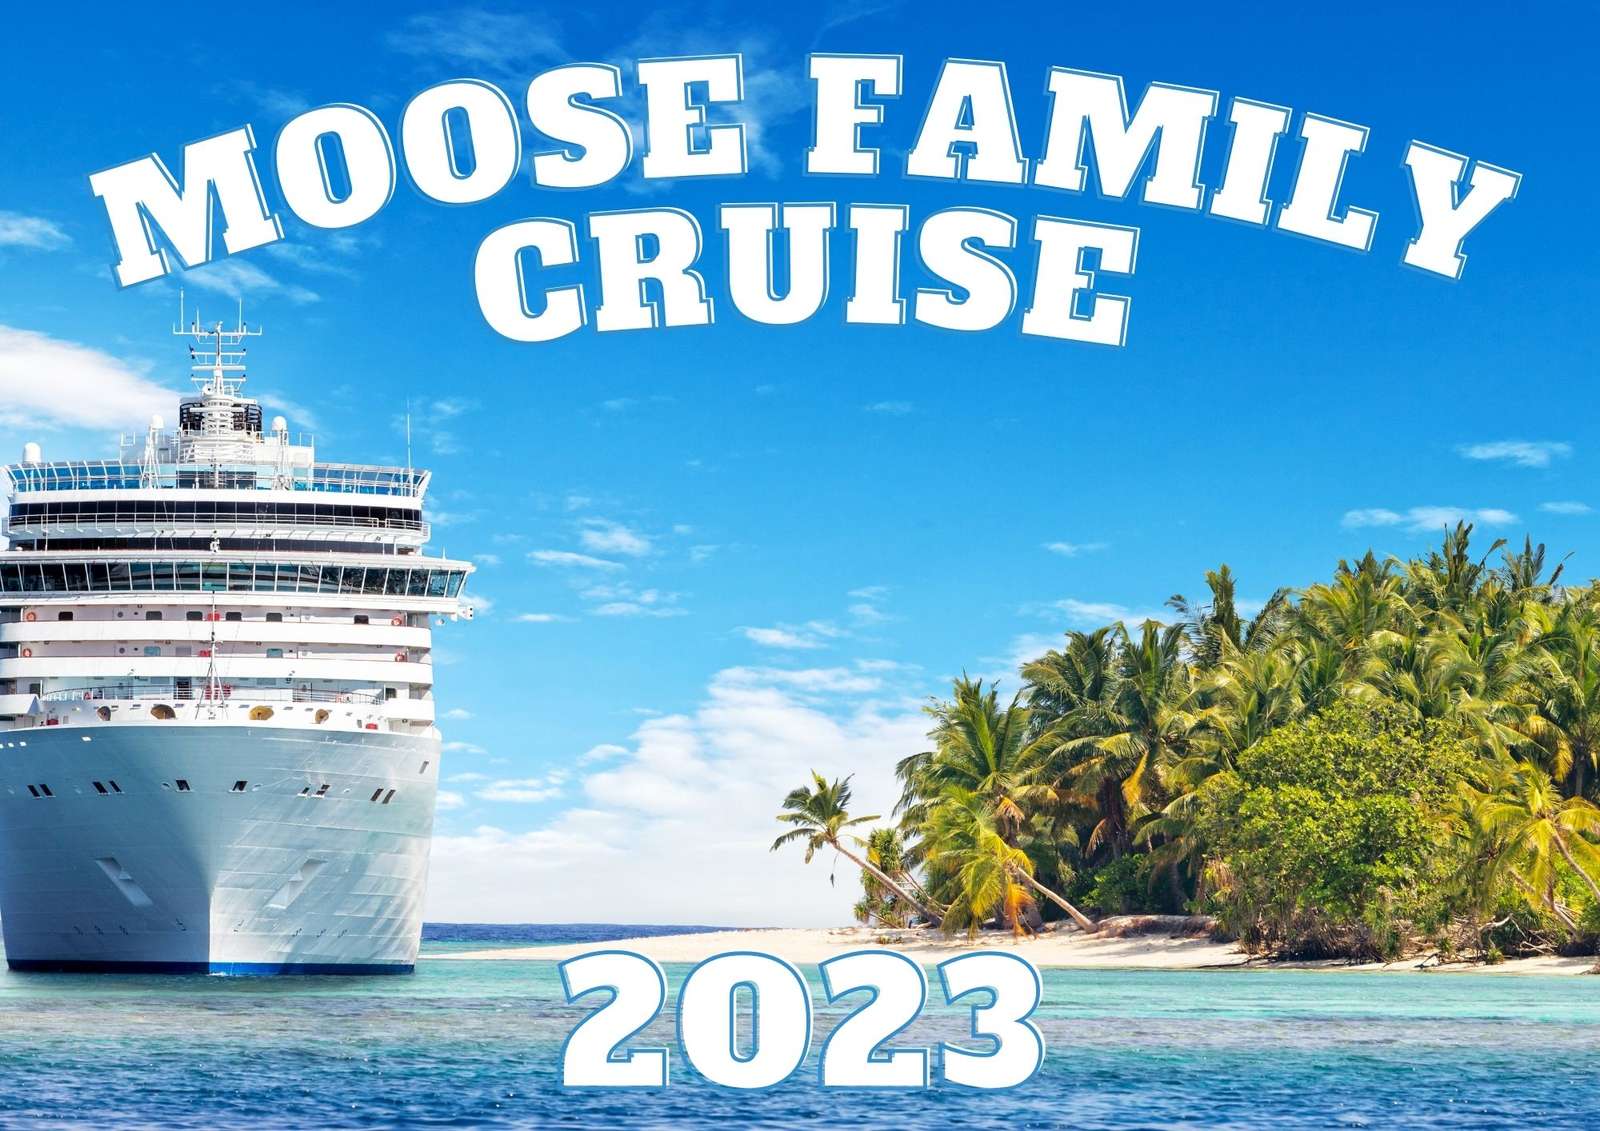 Moose Family Cruise 2023 puzzle online z fotografie